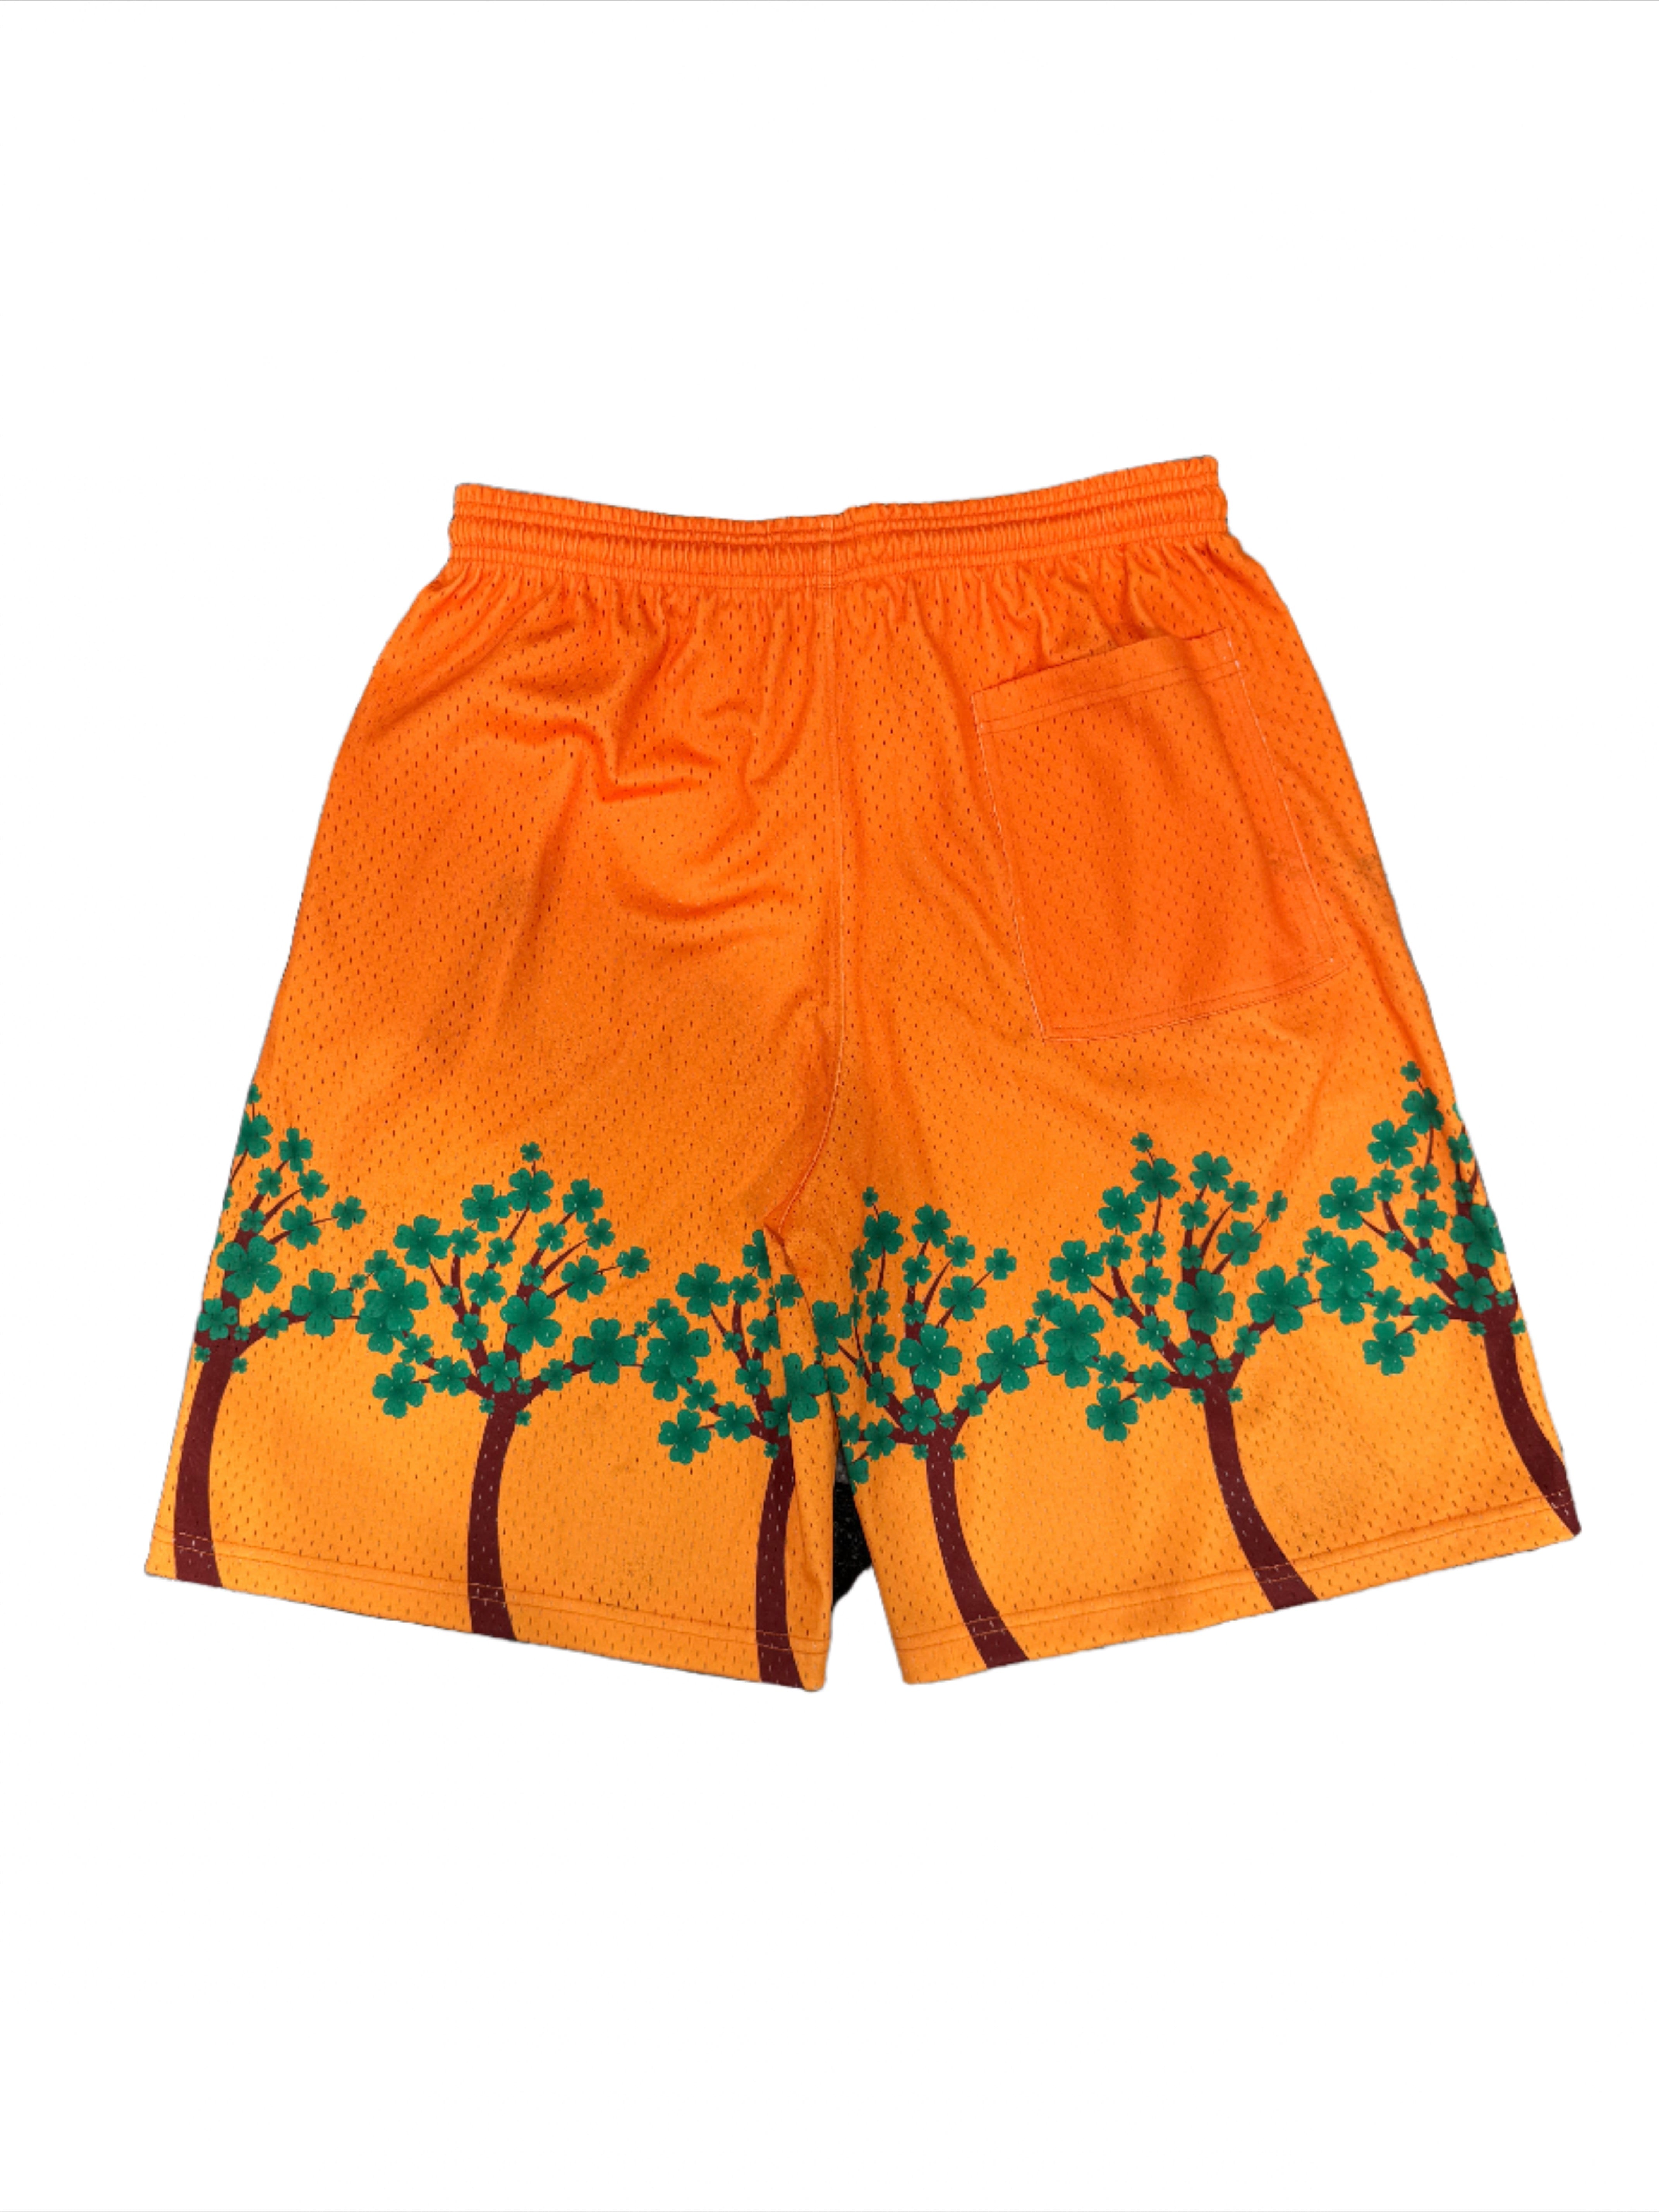 Orange Mesh Shorts